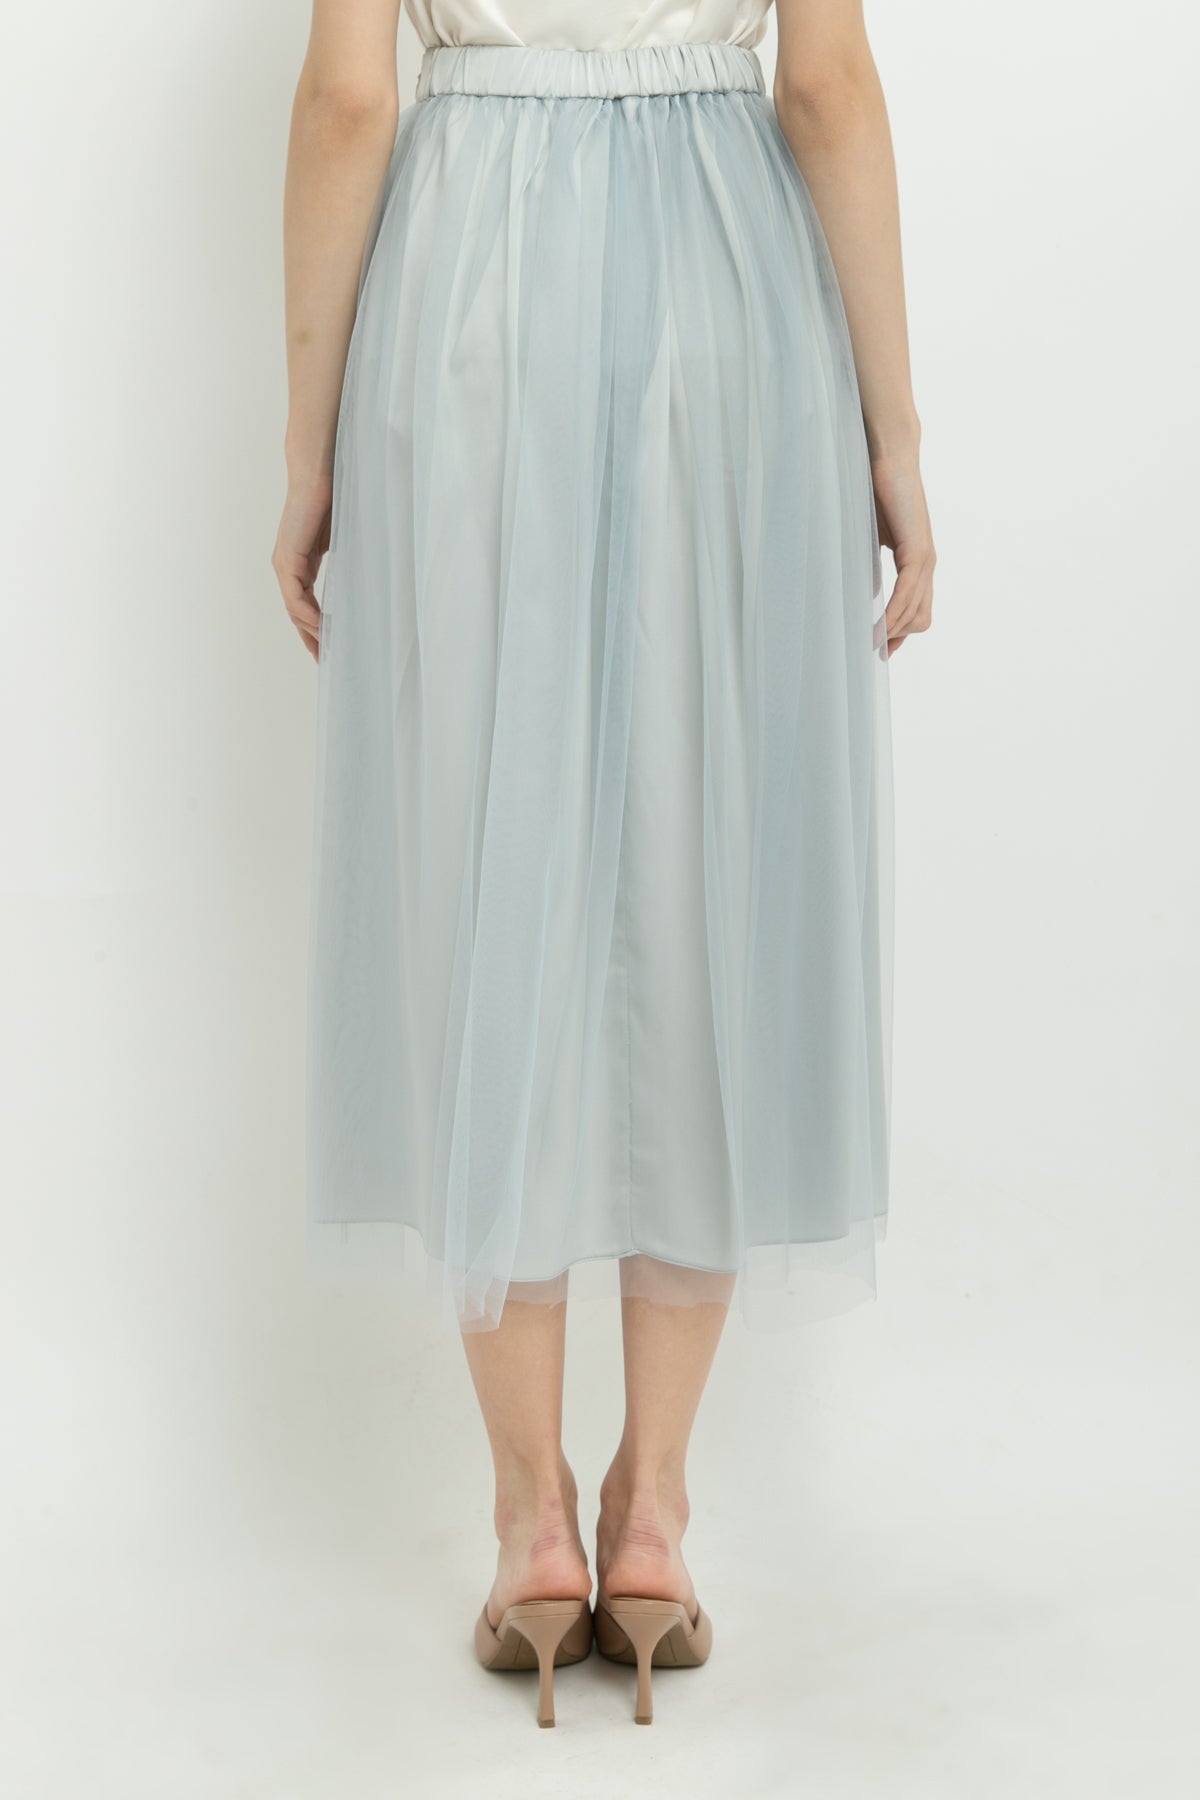 Rania Tulle Skirt in Gray